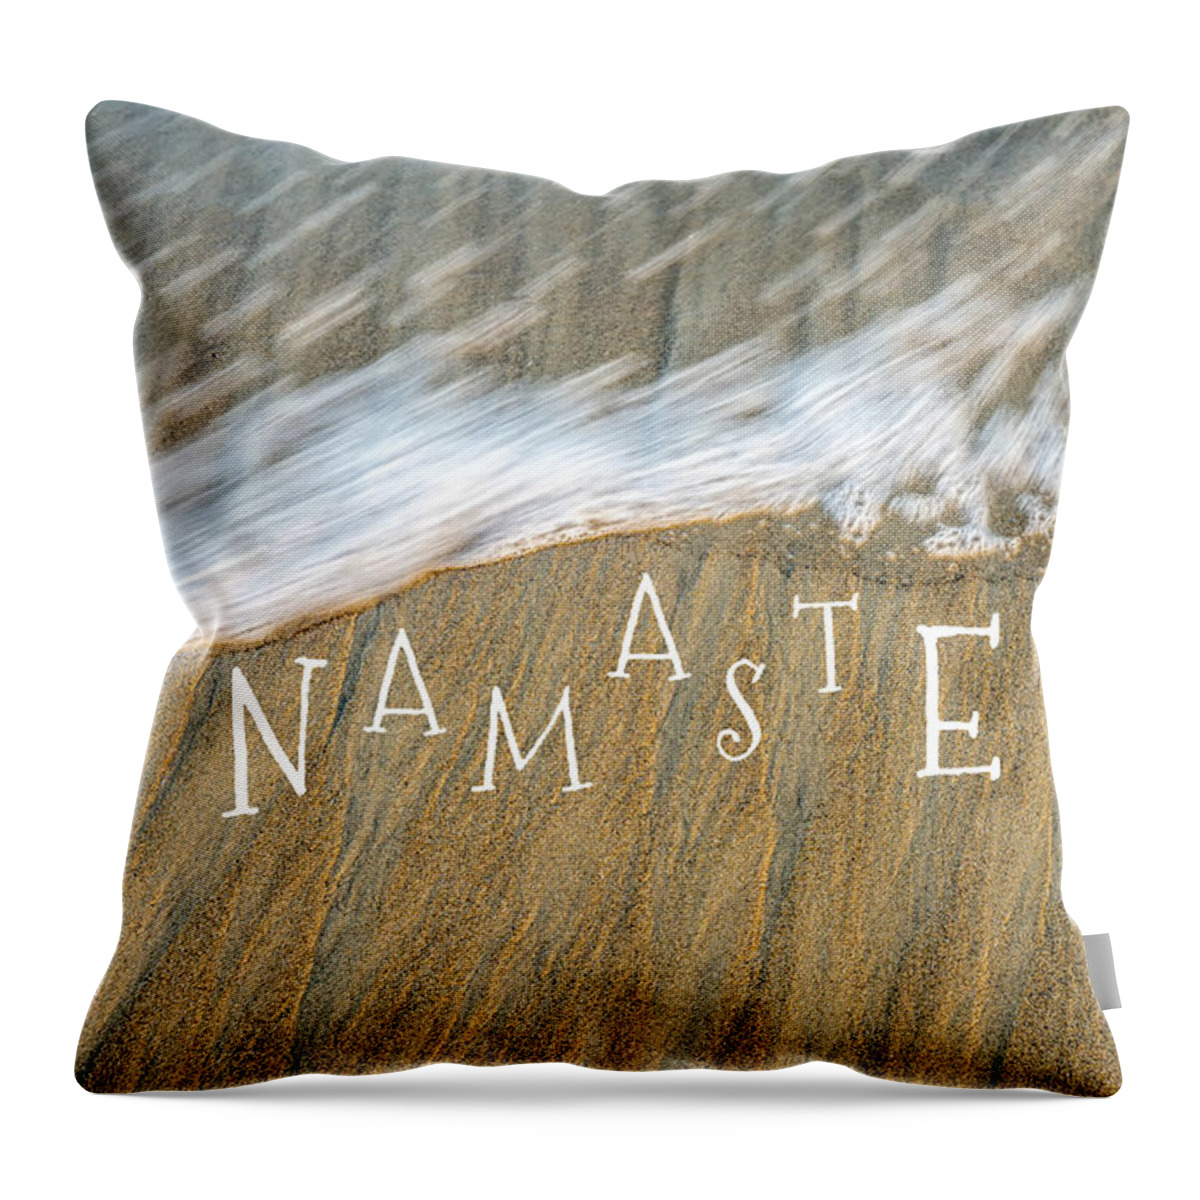 Namaste Throw Pillow featuring the mixed media Namaste On The Beach by Joseph S Giacalone